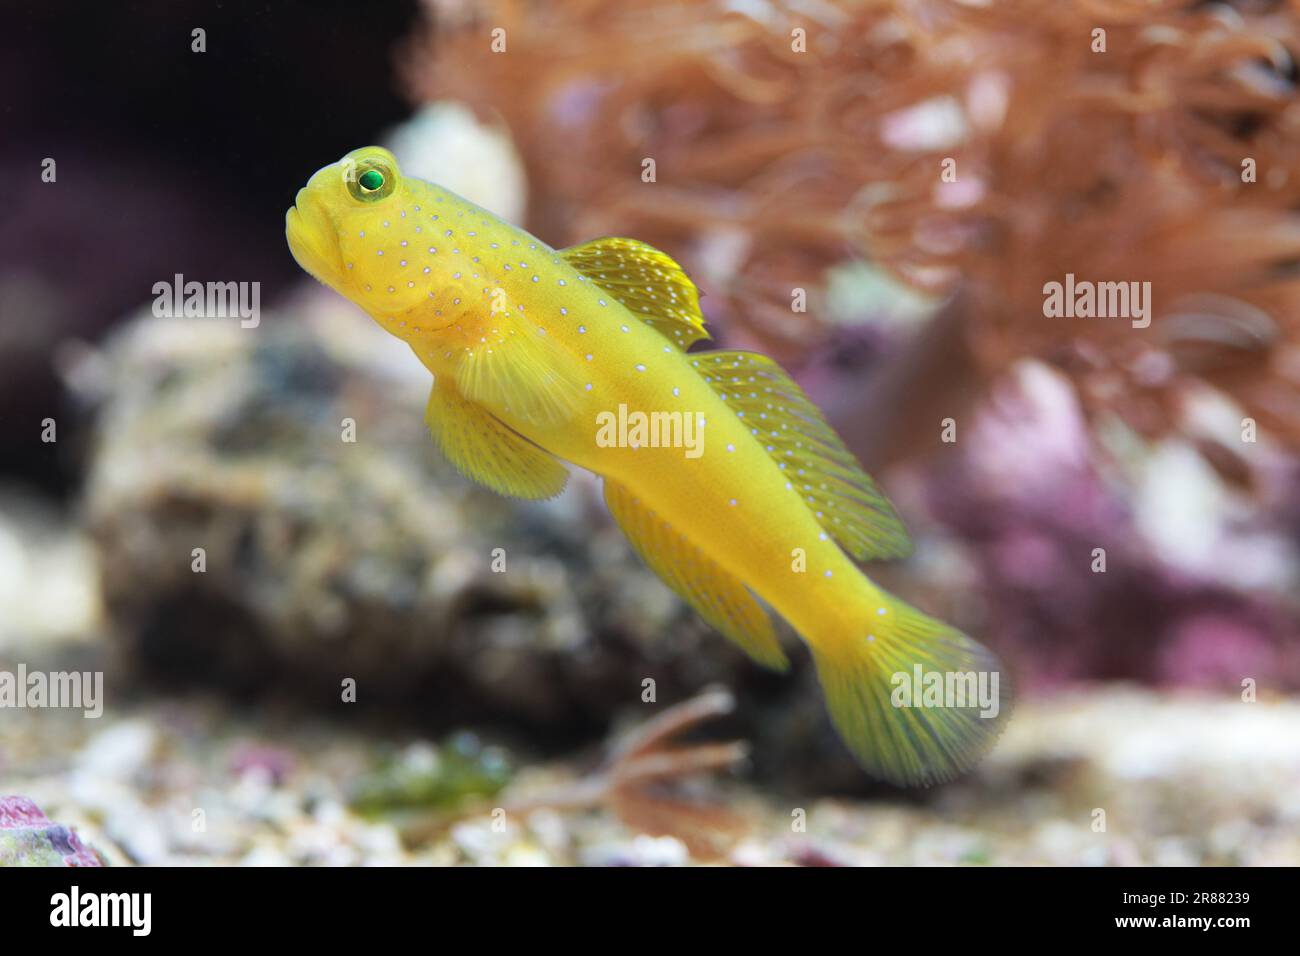 Yellow watchman Goby [ Cryptocentrus cintus ] in marine reef aquarium Stock Photo